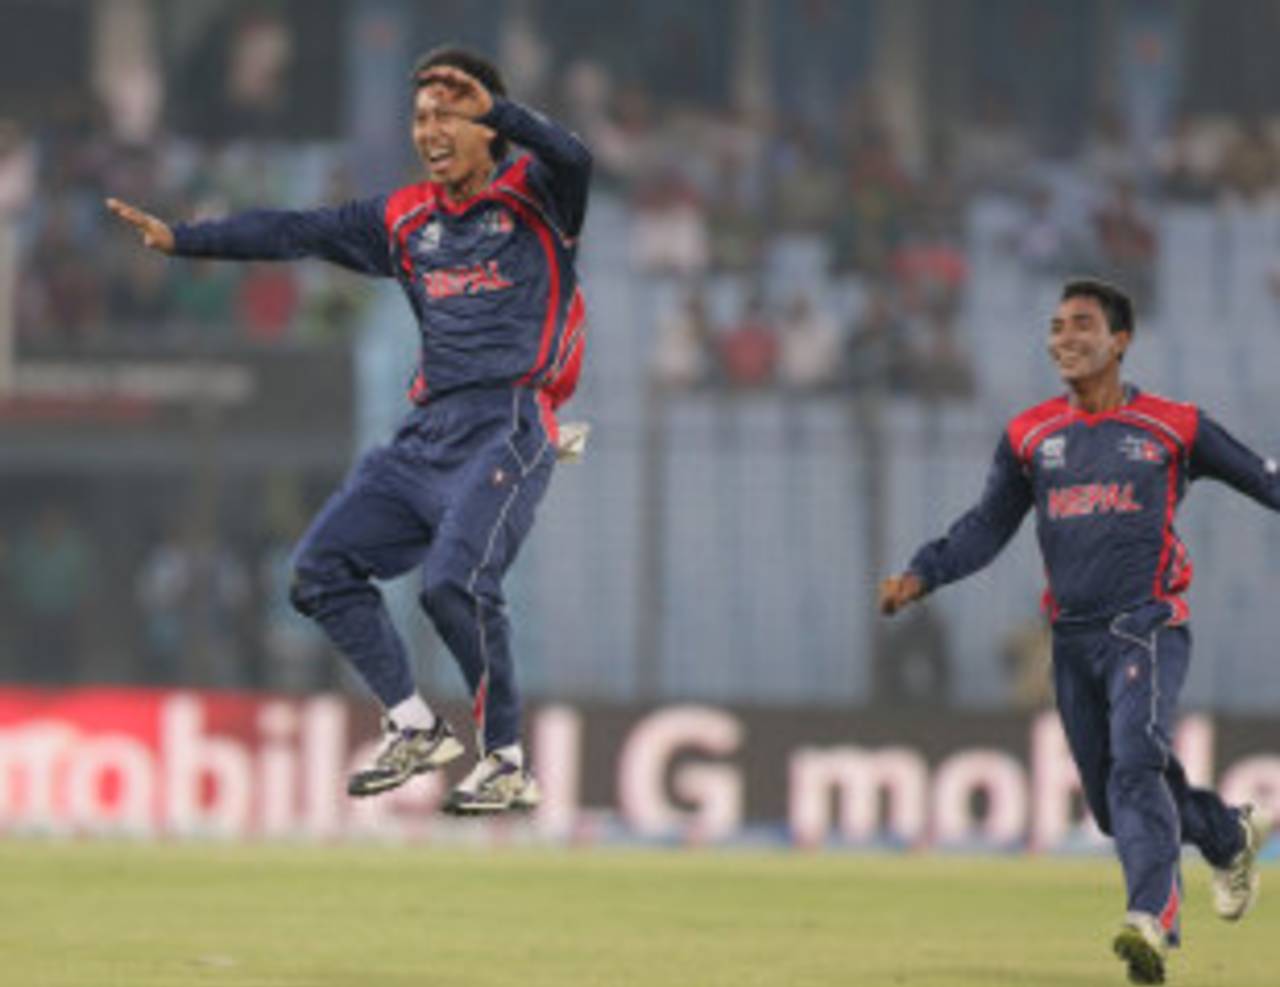 File photo: Shakti Gauchan ended with figures of 7-2-7-2 for Nepal&nbsp;&nbsp;&bull;&nbsp;&nbsp;ICC